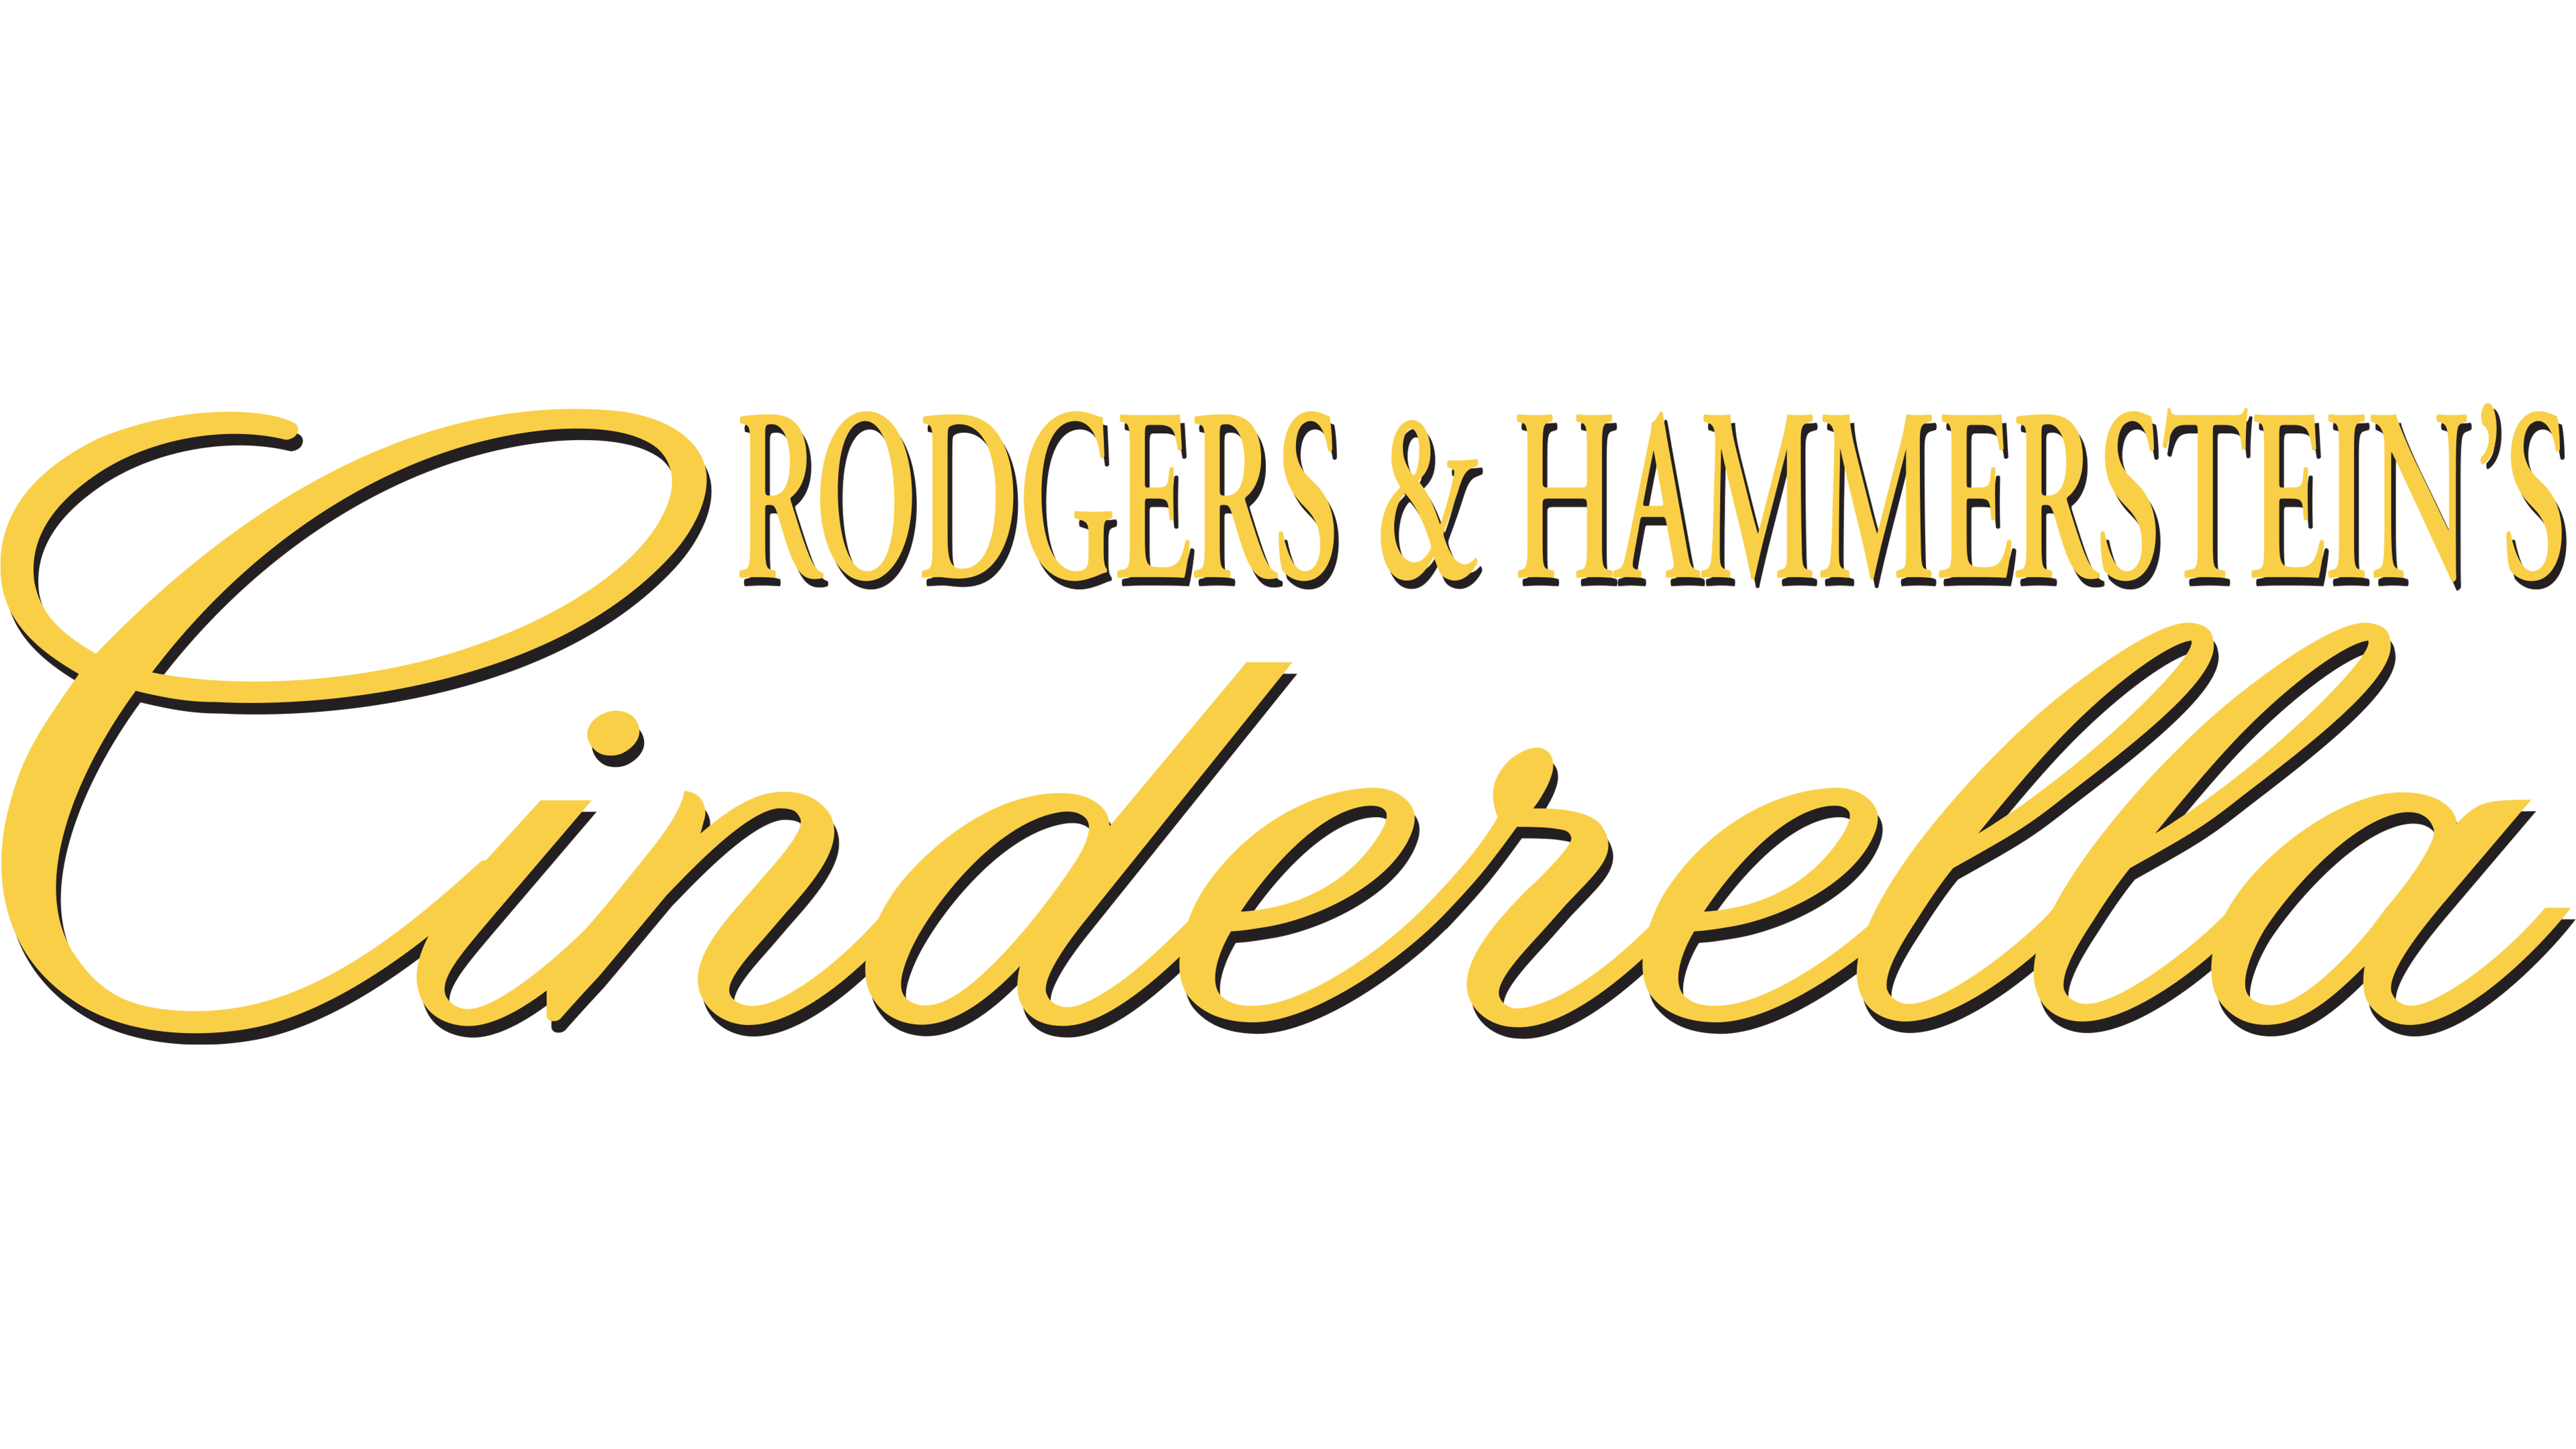 Julie Andrews Rodgers and Hammerstein's Cinderella. Cinderella watch. Mindell and Rogers.